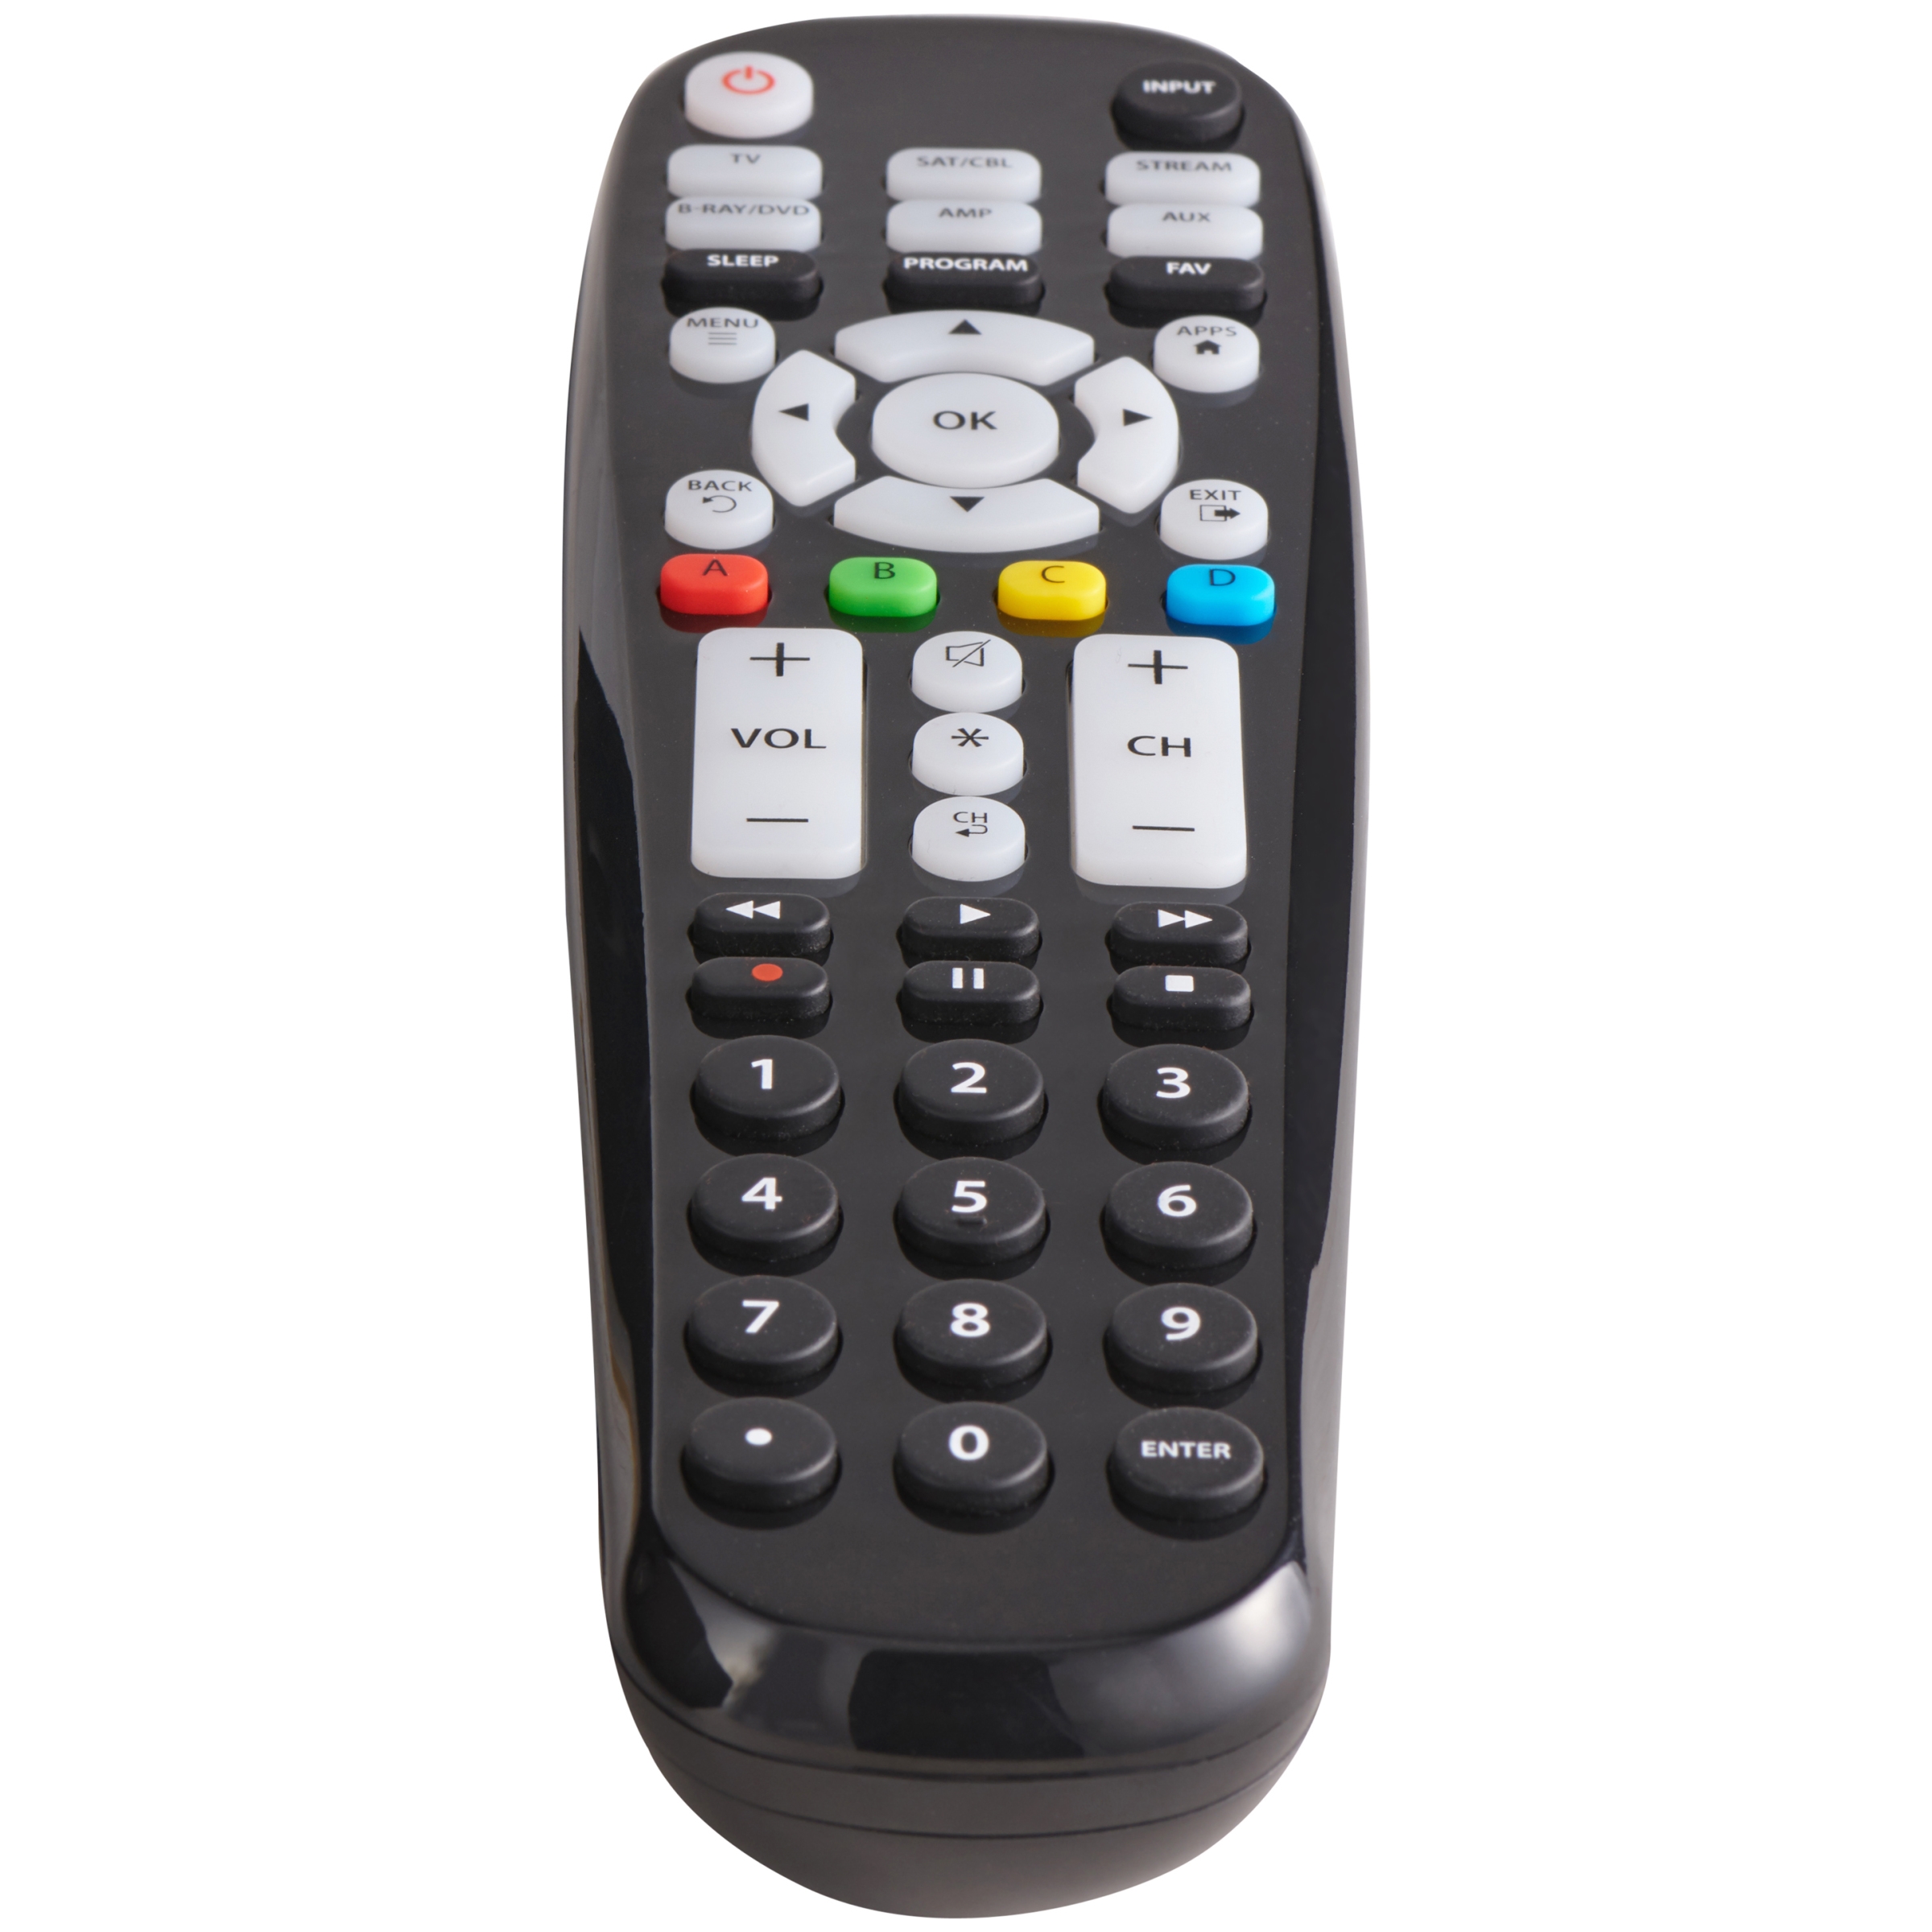 Motorola universal remote control